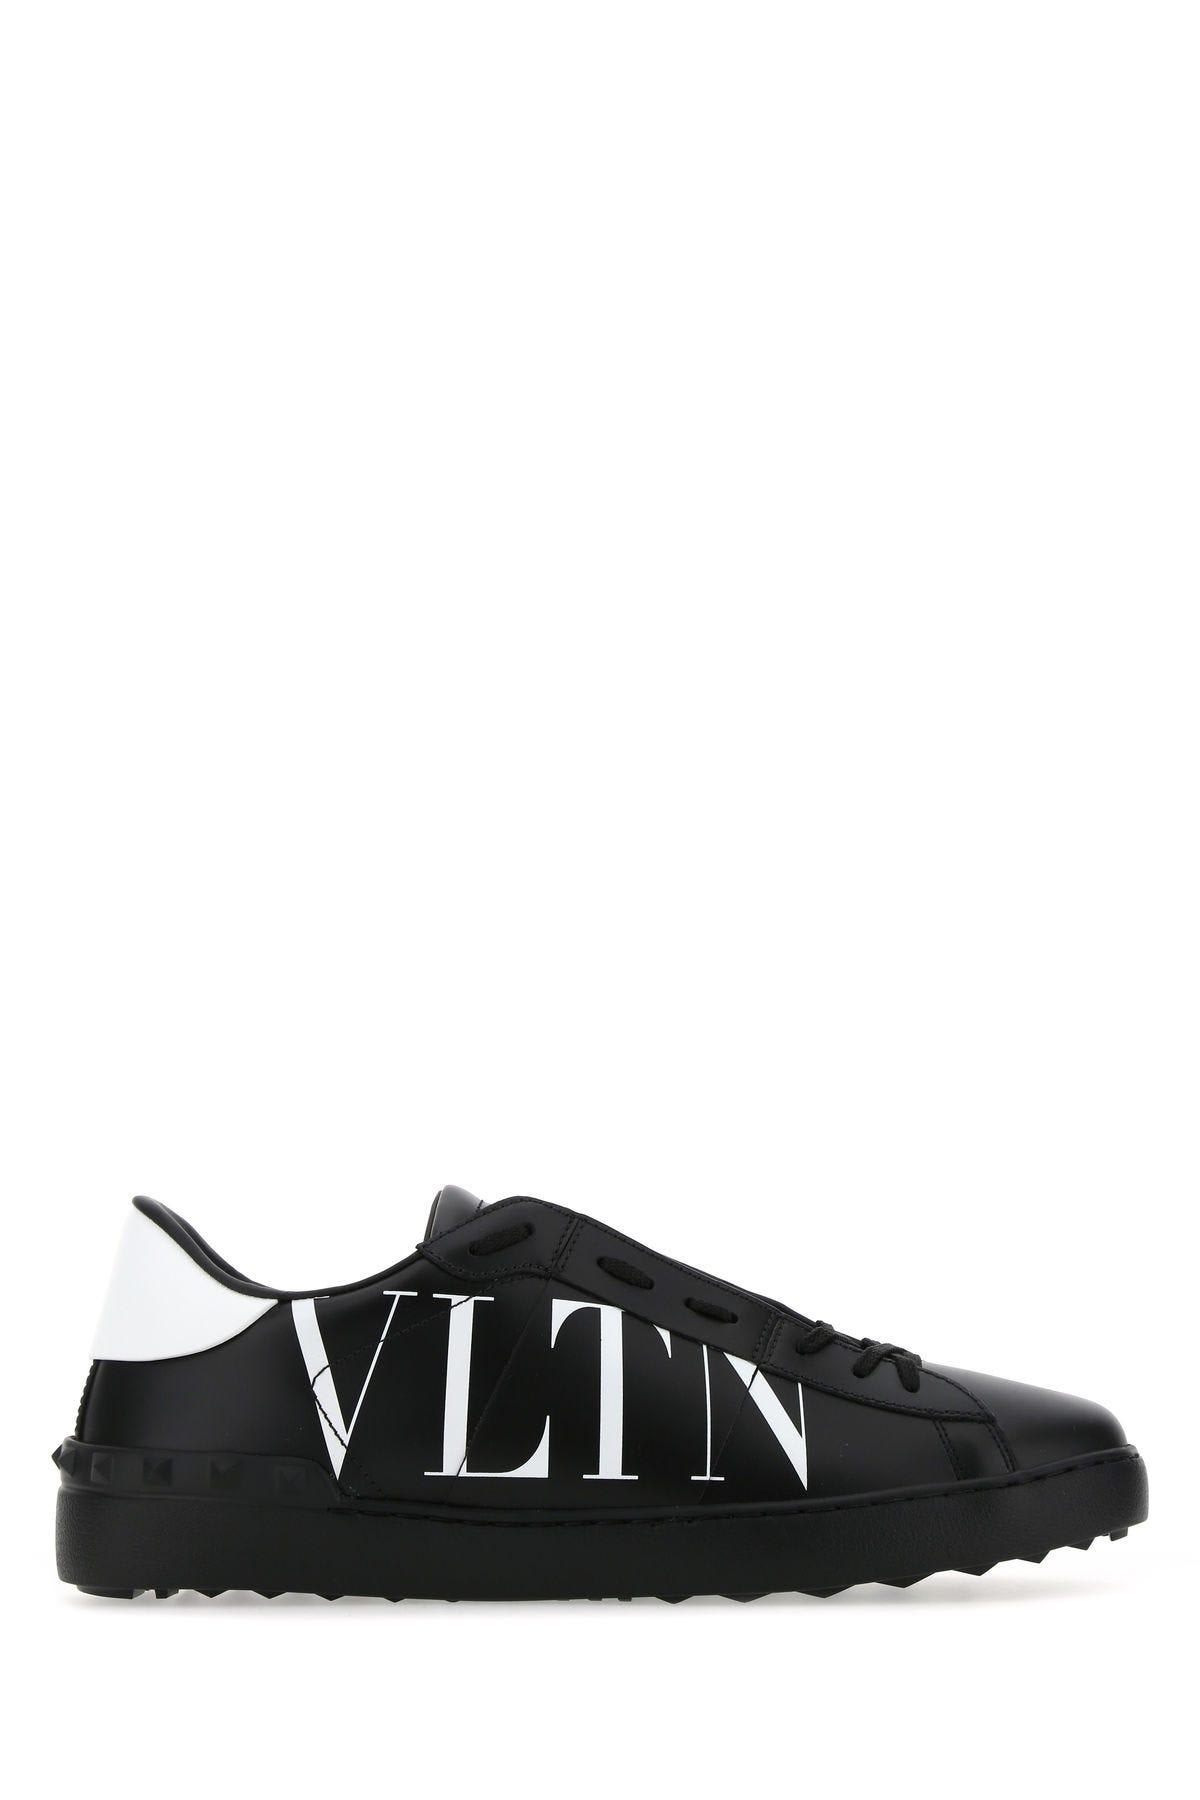 Valentino Garavani Leather Sneakers | ModeSens